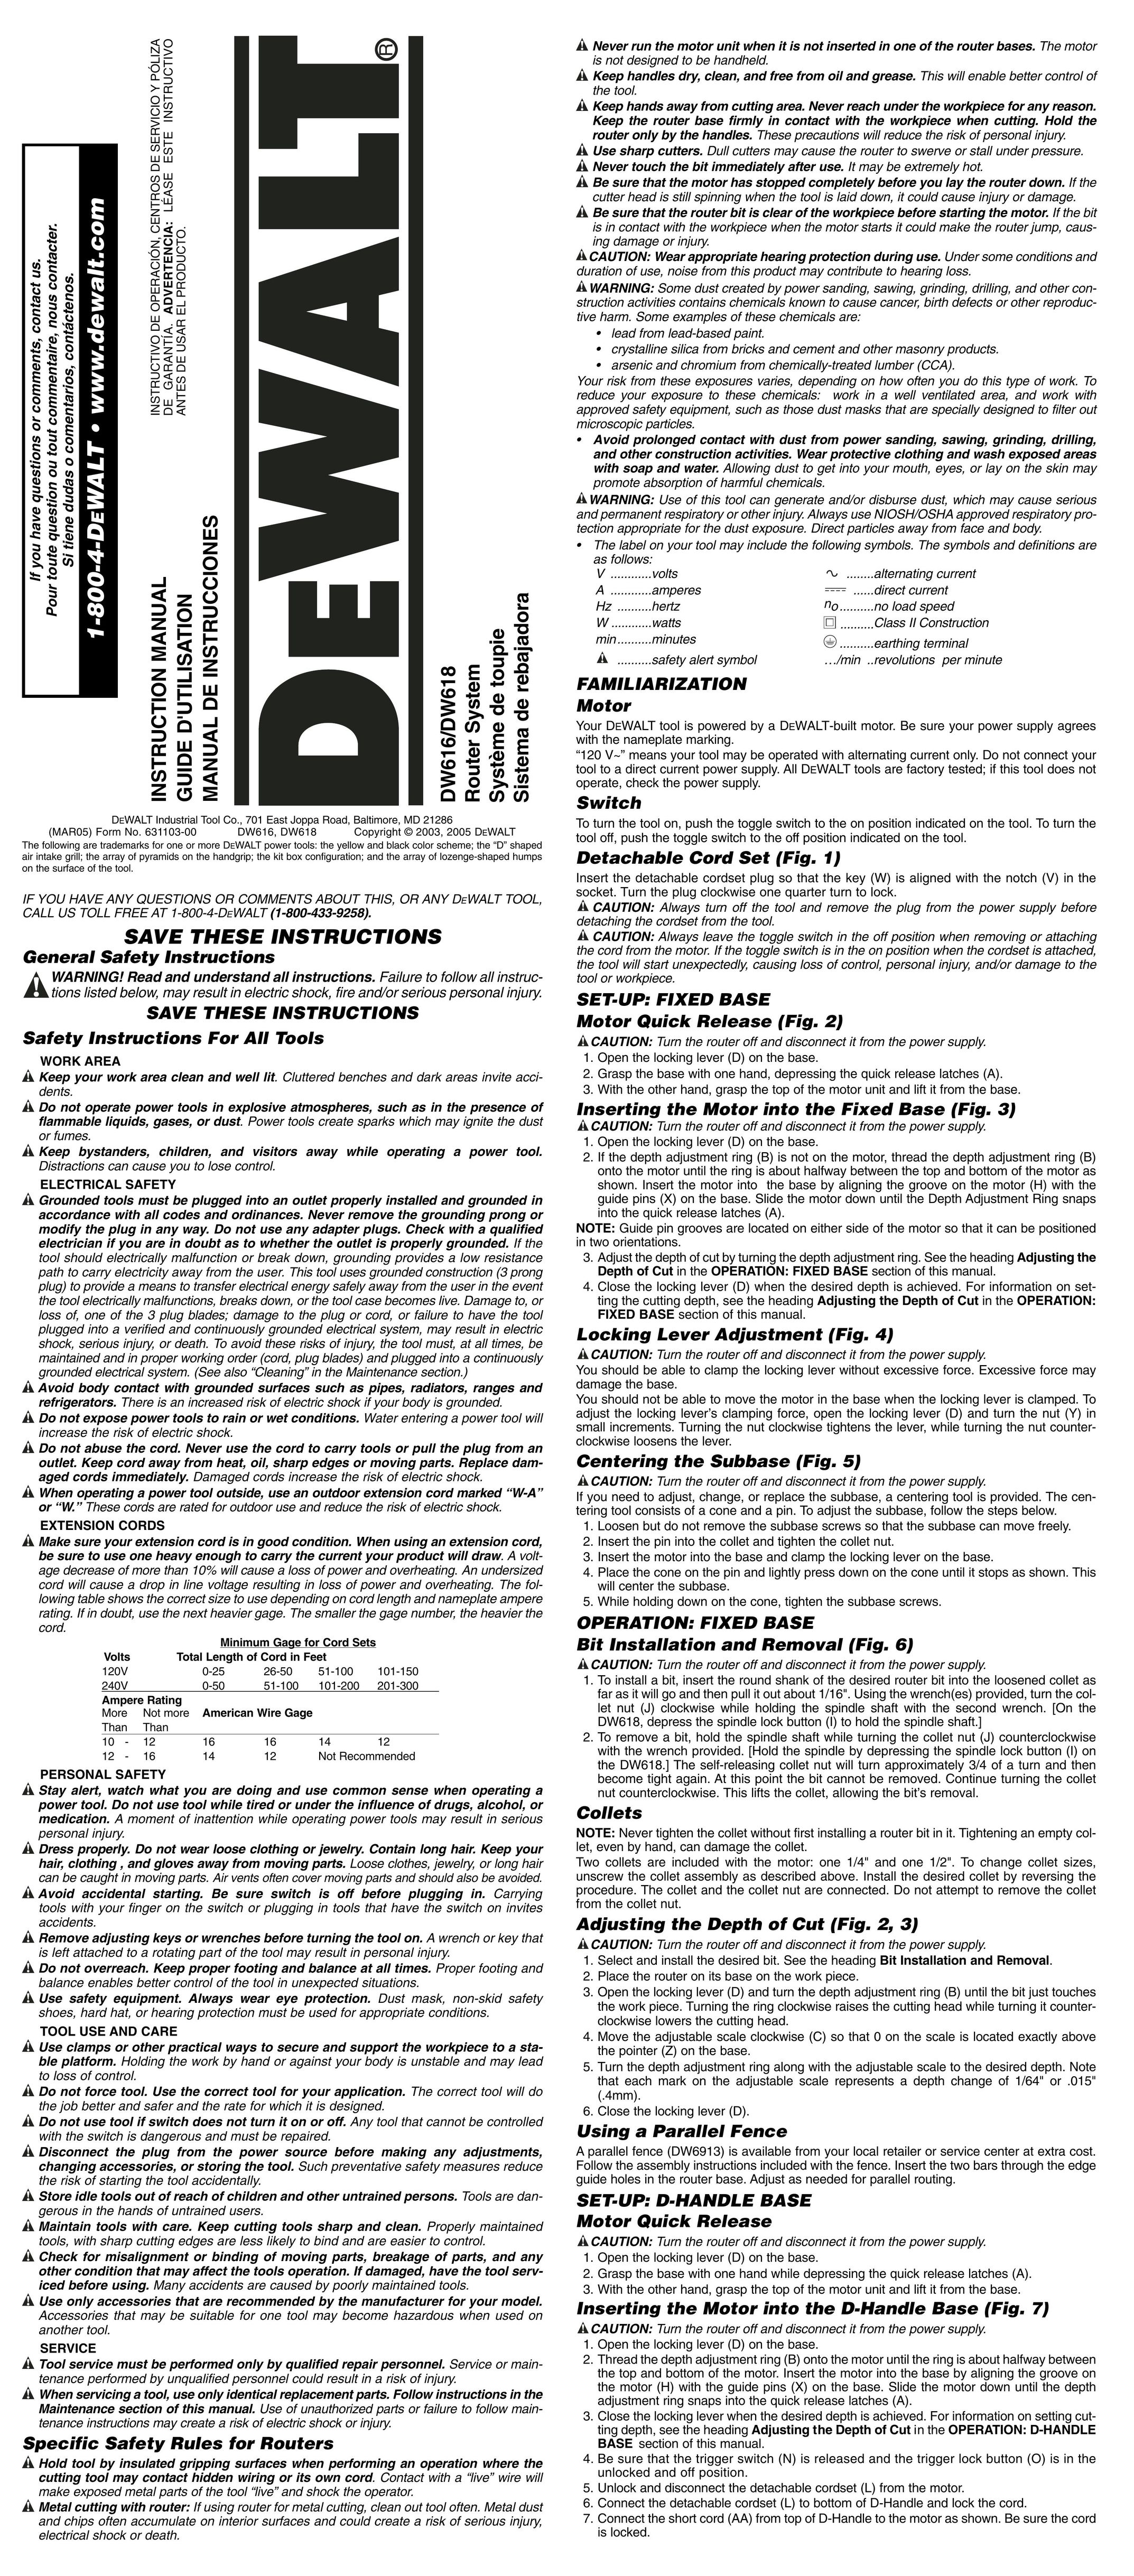 DeWalt DW616 Router User Manual